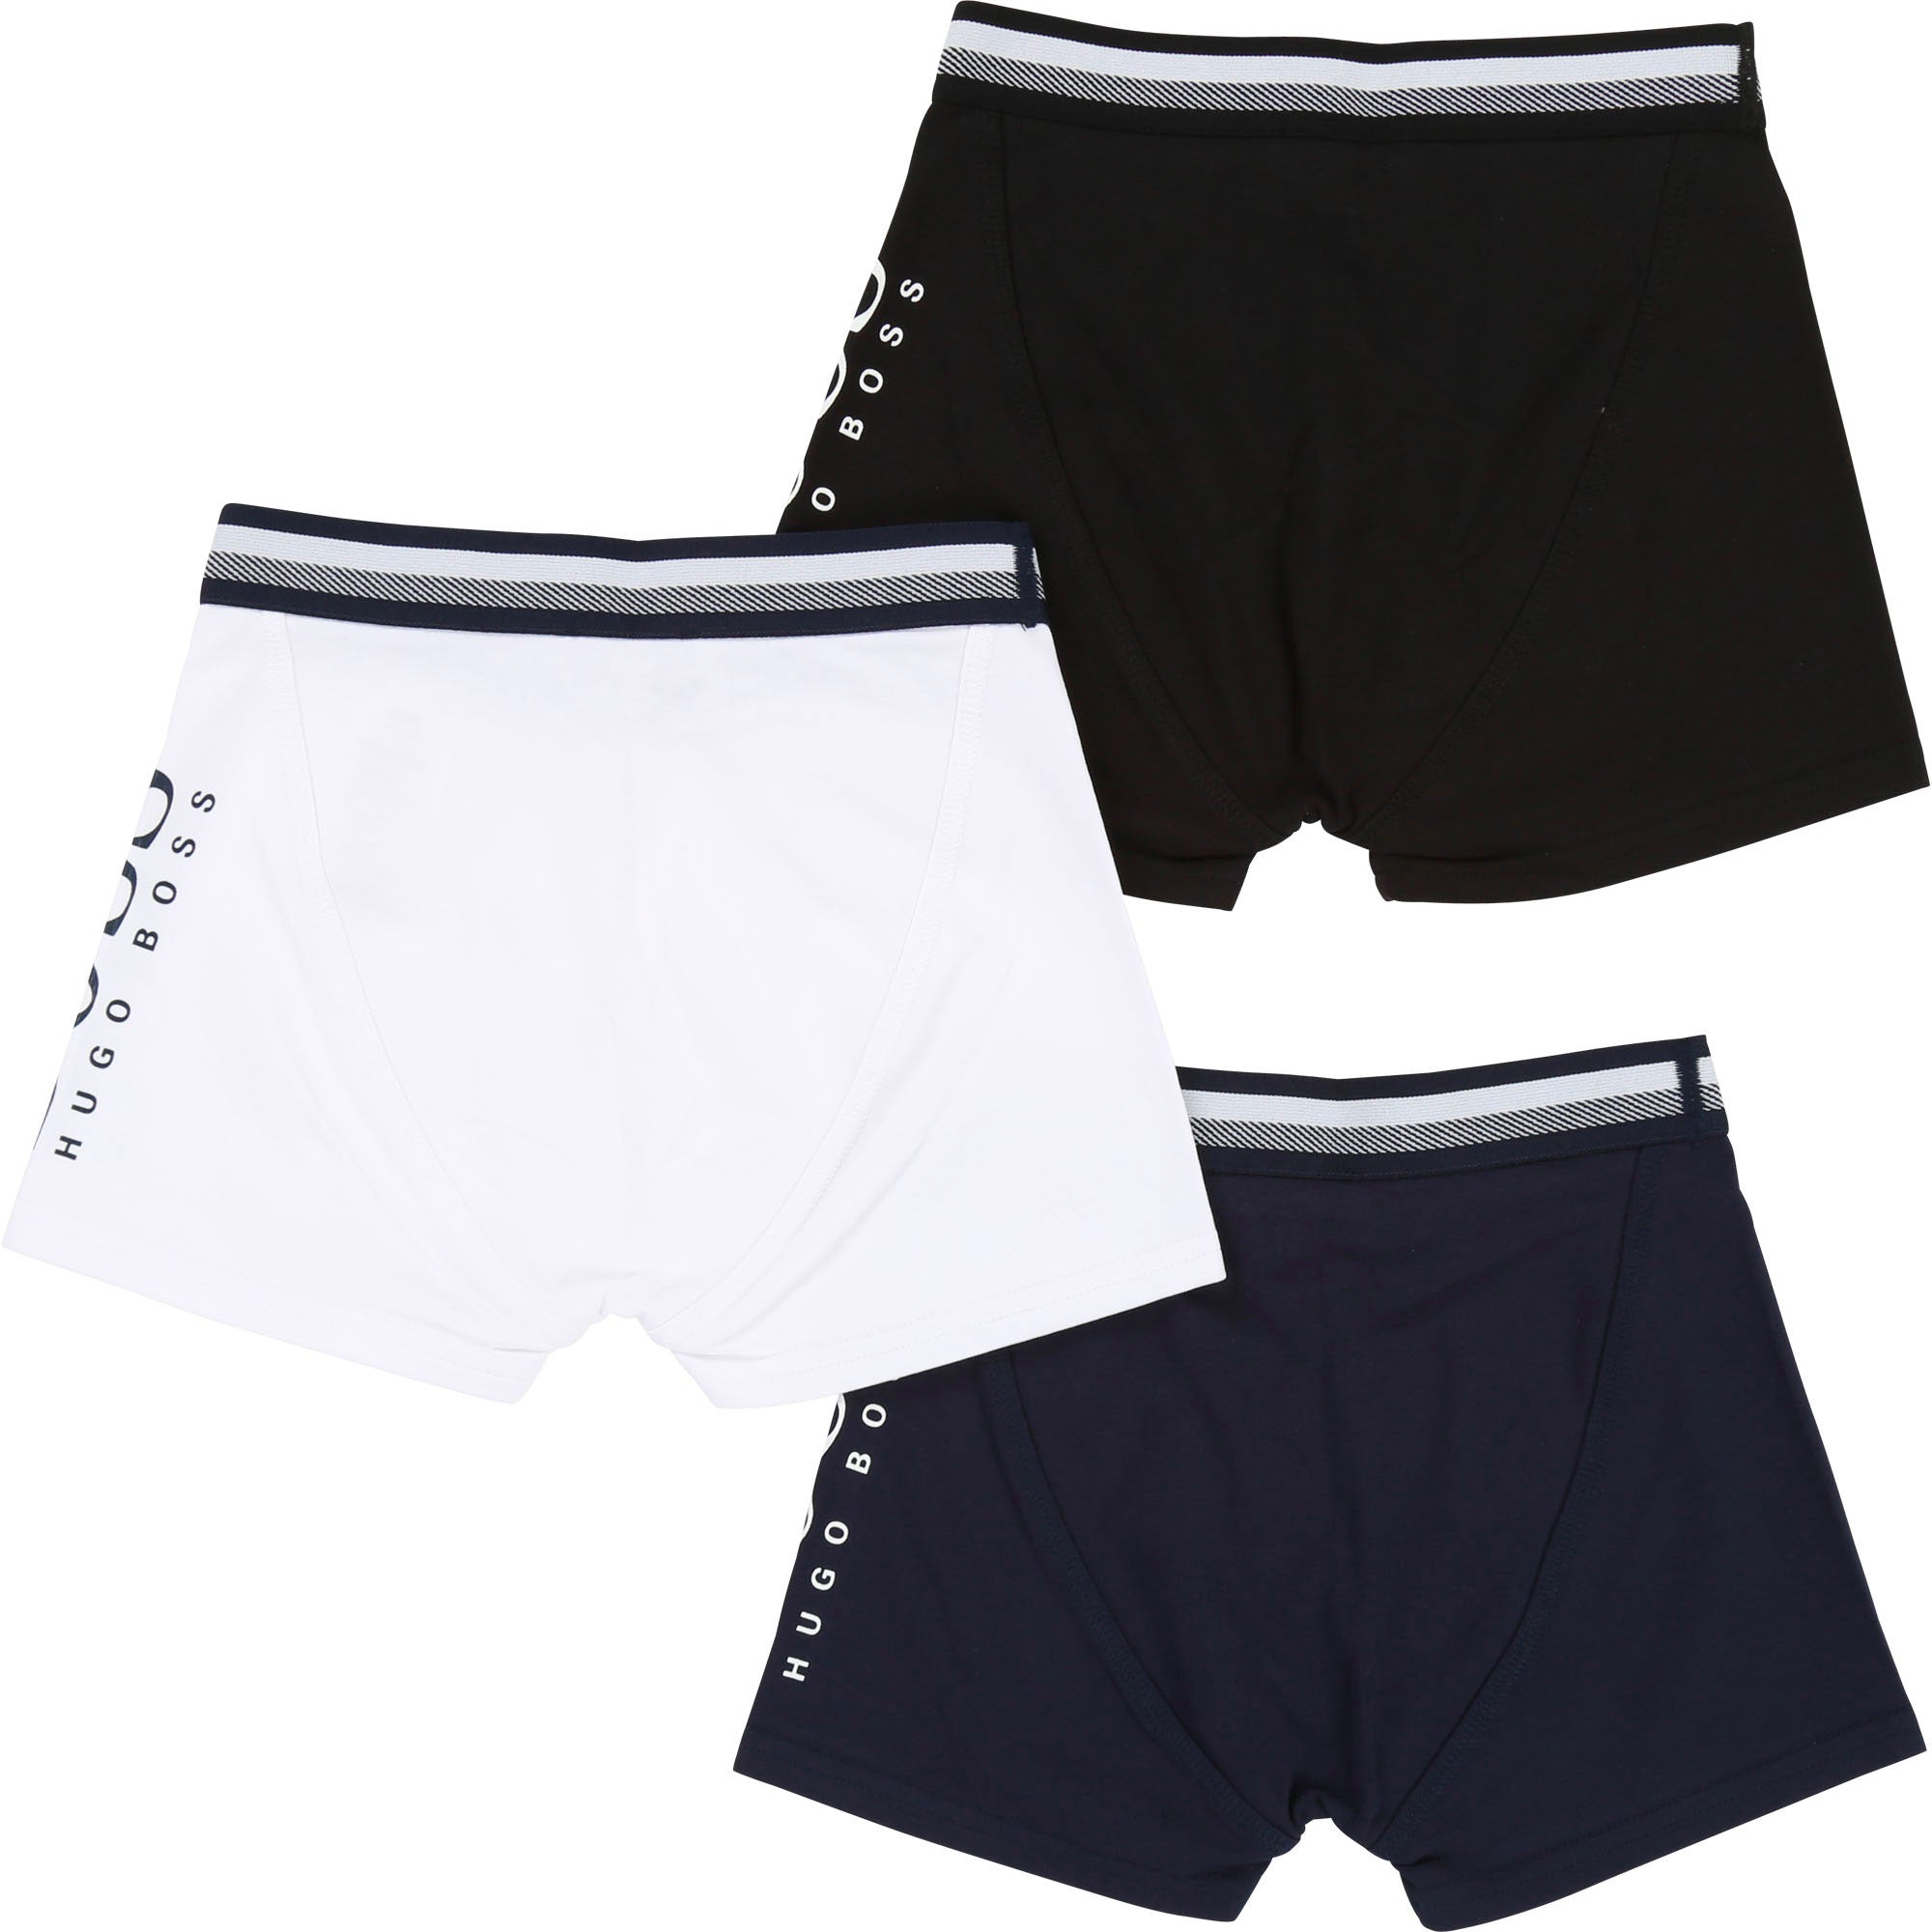 Boys Tricolor Logo Underwear Set(3 Pack)